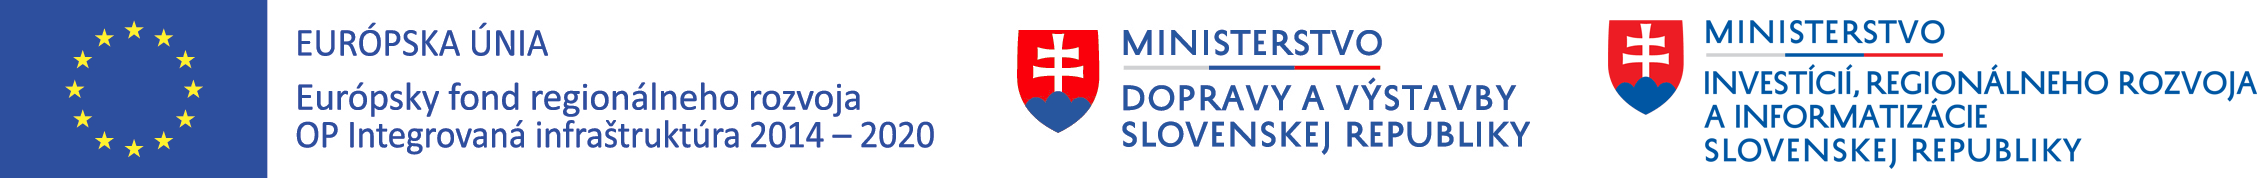 logo OPII MDV - EFRR - MIRRI